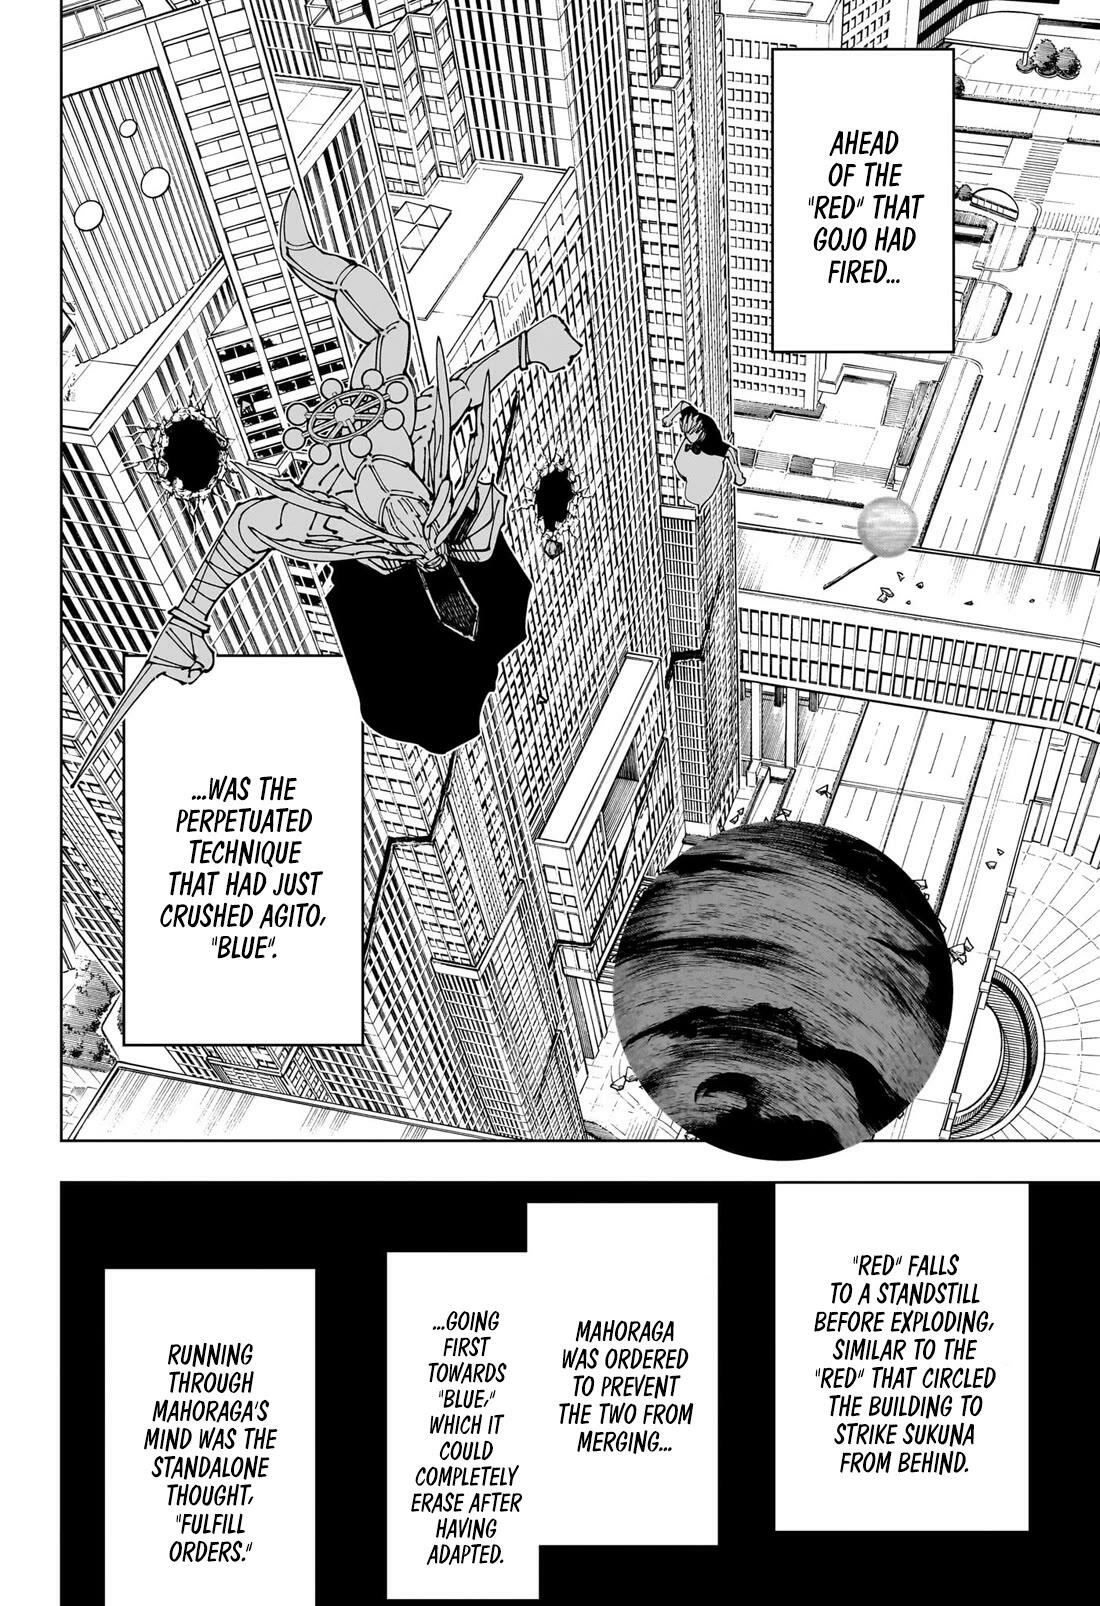 Jujutsu Kaisen Chapter 235: The Decisive Battle In The Uninhabited, Demon-Infested Shinjuku ⑬ page 11 - Mangakakalot